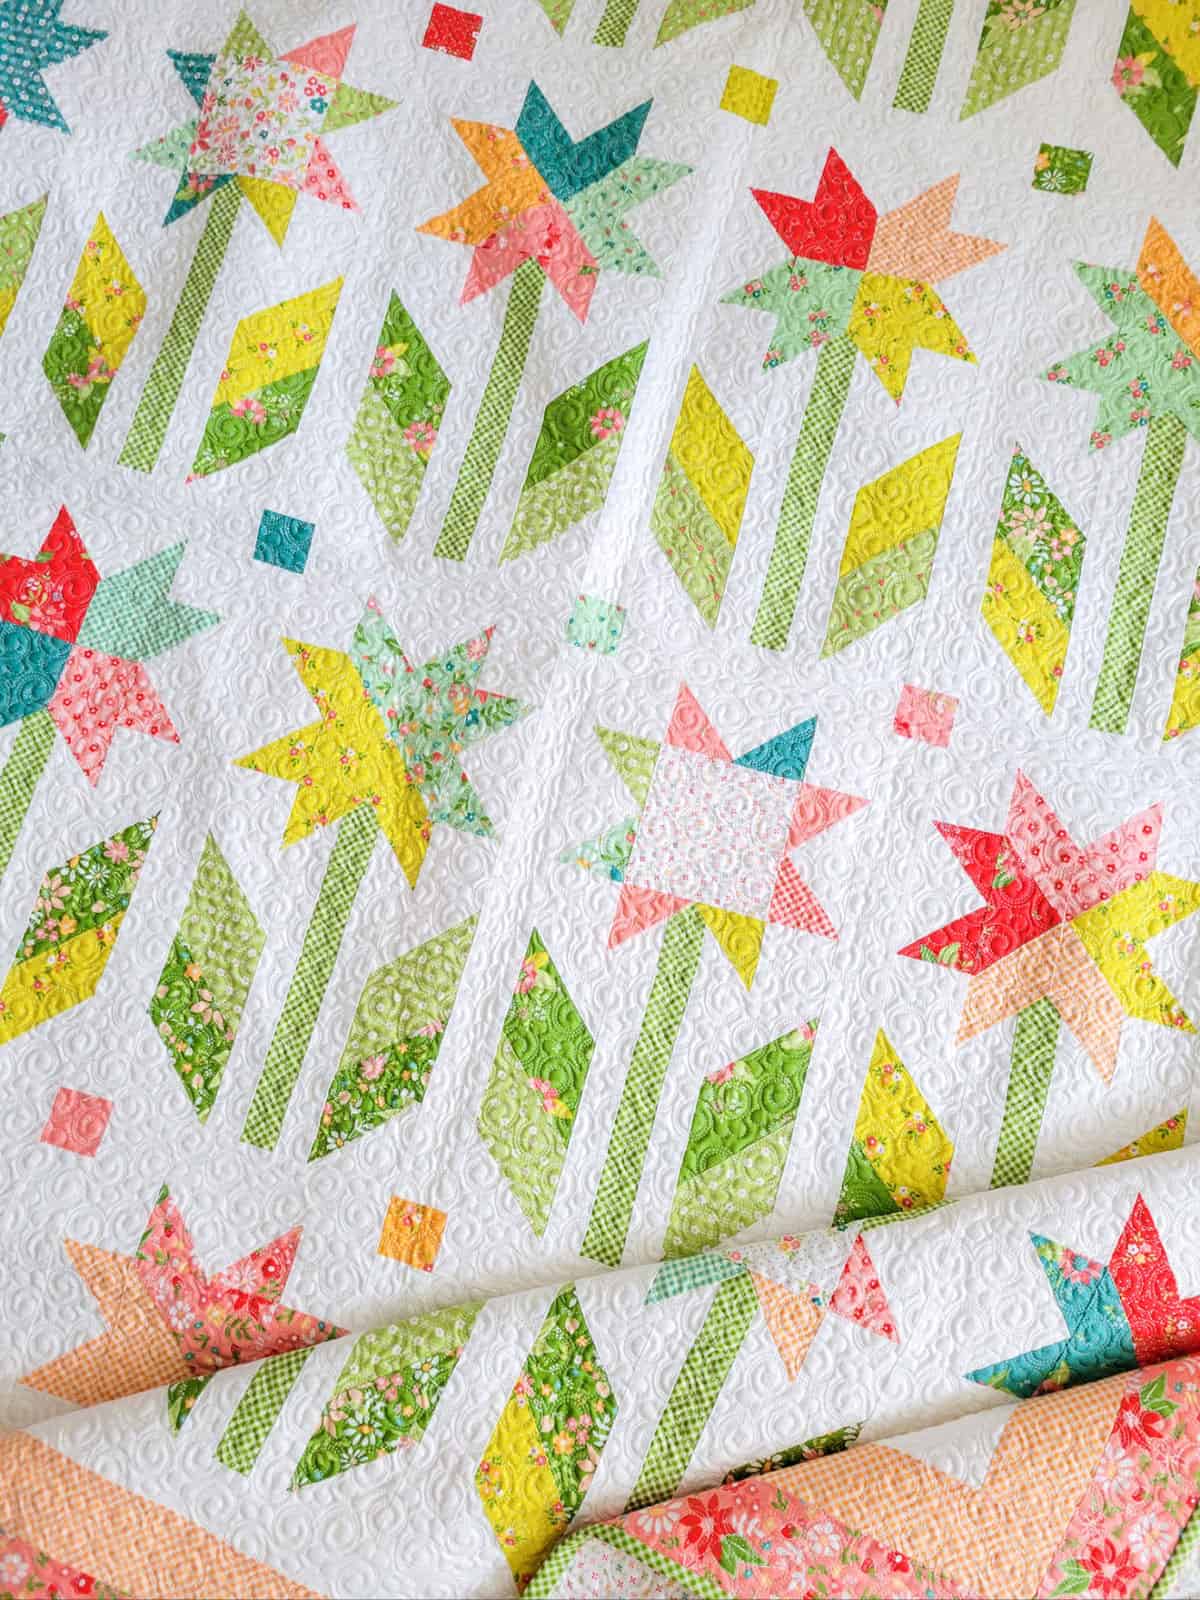 Botanical Remix Quilt by Chelsi Stratton in Strawberry Lemonade fabrics by Sherri & Chelsi for Moda Fabrics